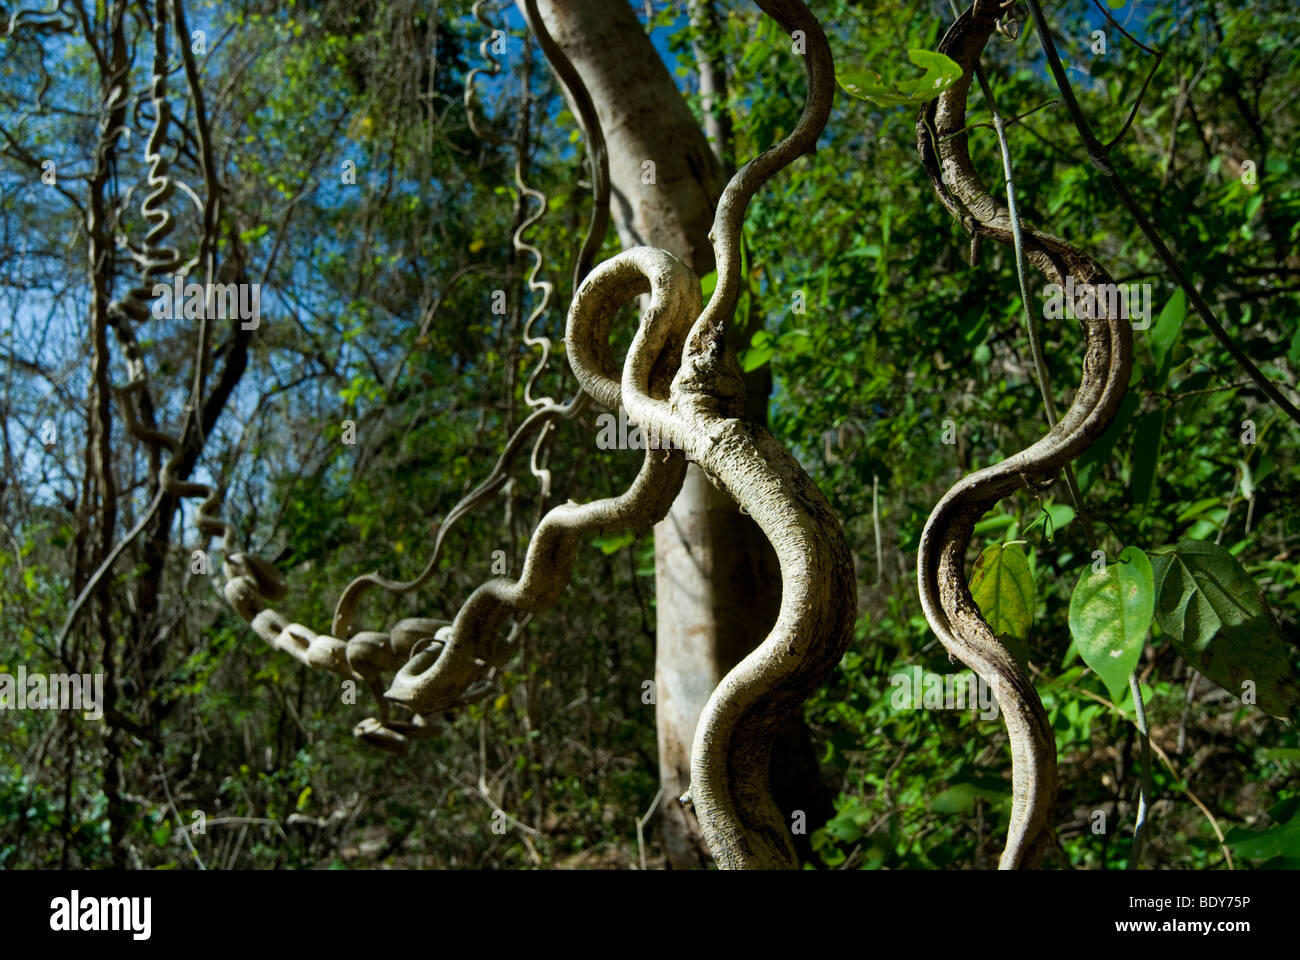 Monkey Ladder Vine (Bauhinia glabra), a liana. Stock Photo